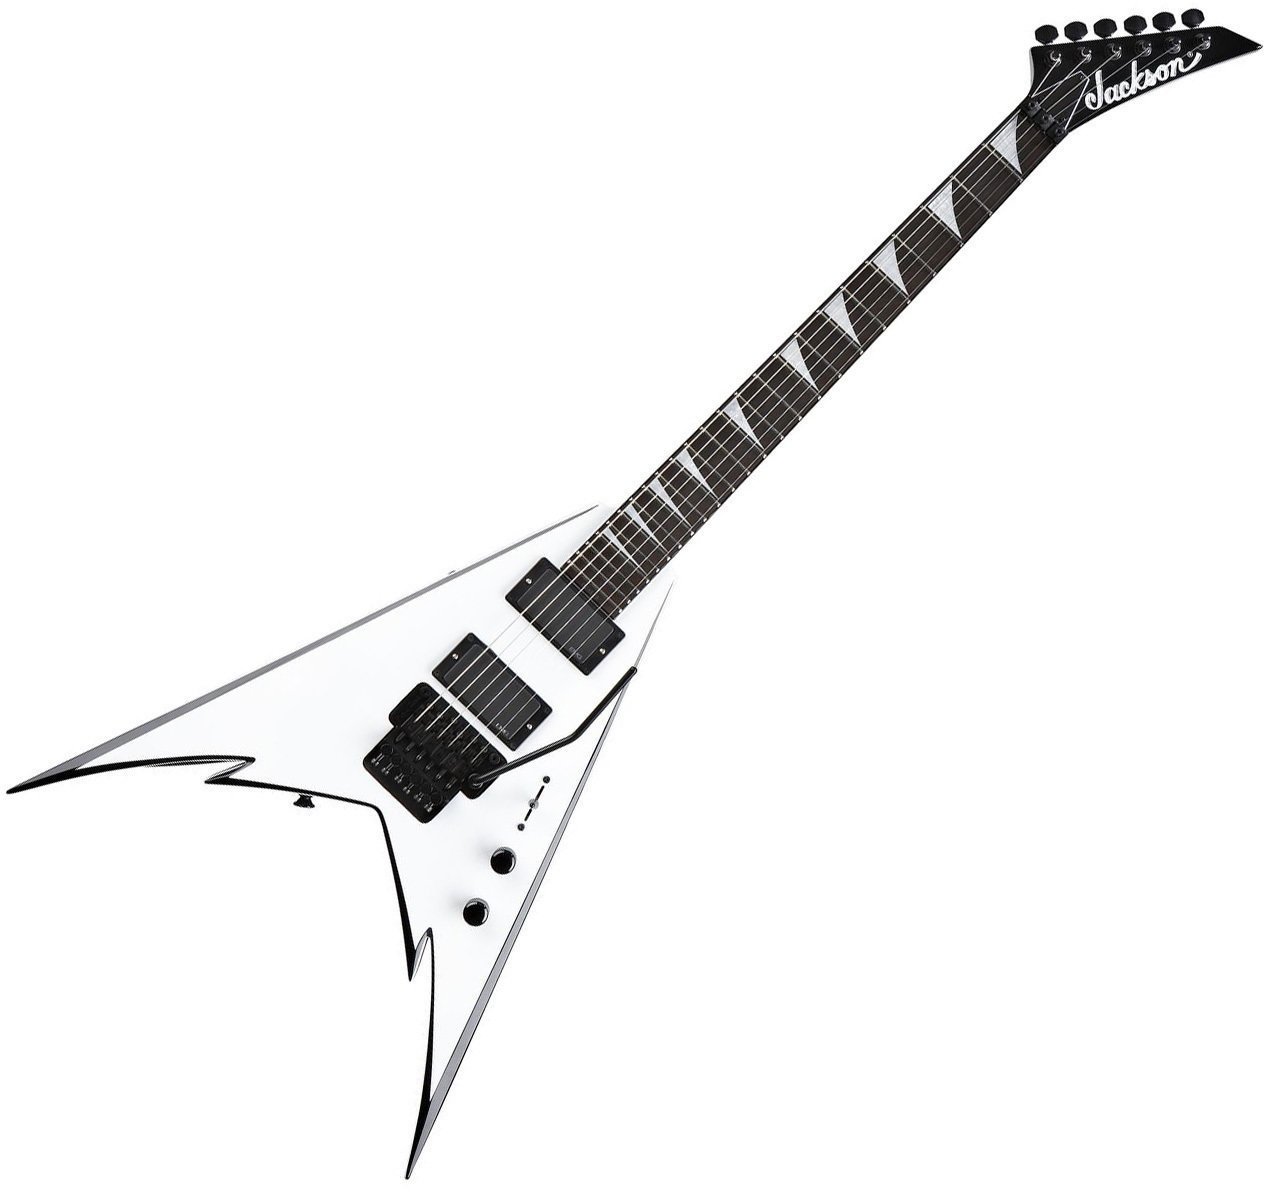 Signature Electric Guitar Jackson Demmelition Pro Series White with Black Bevels